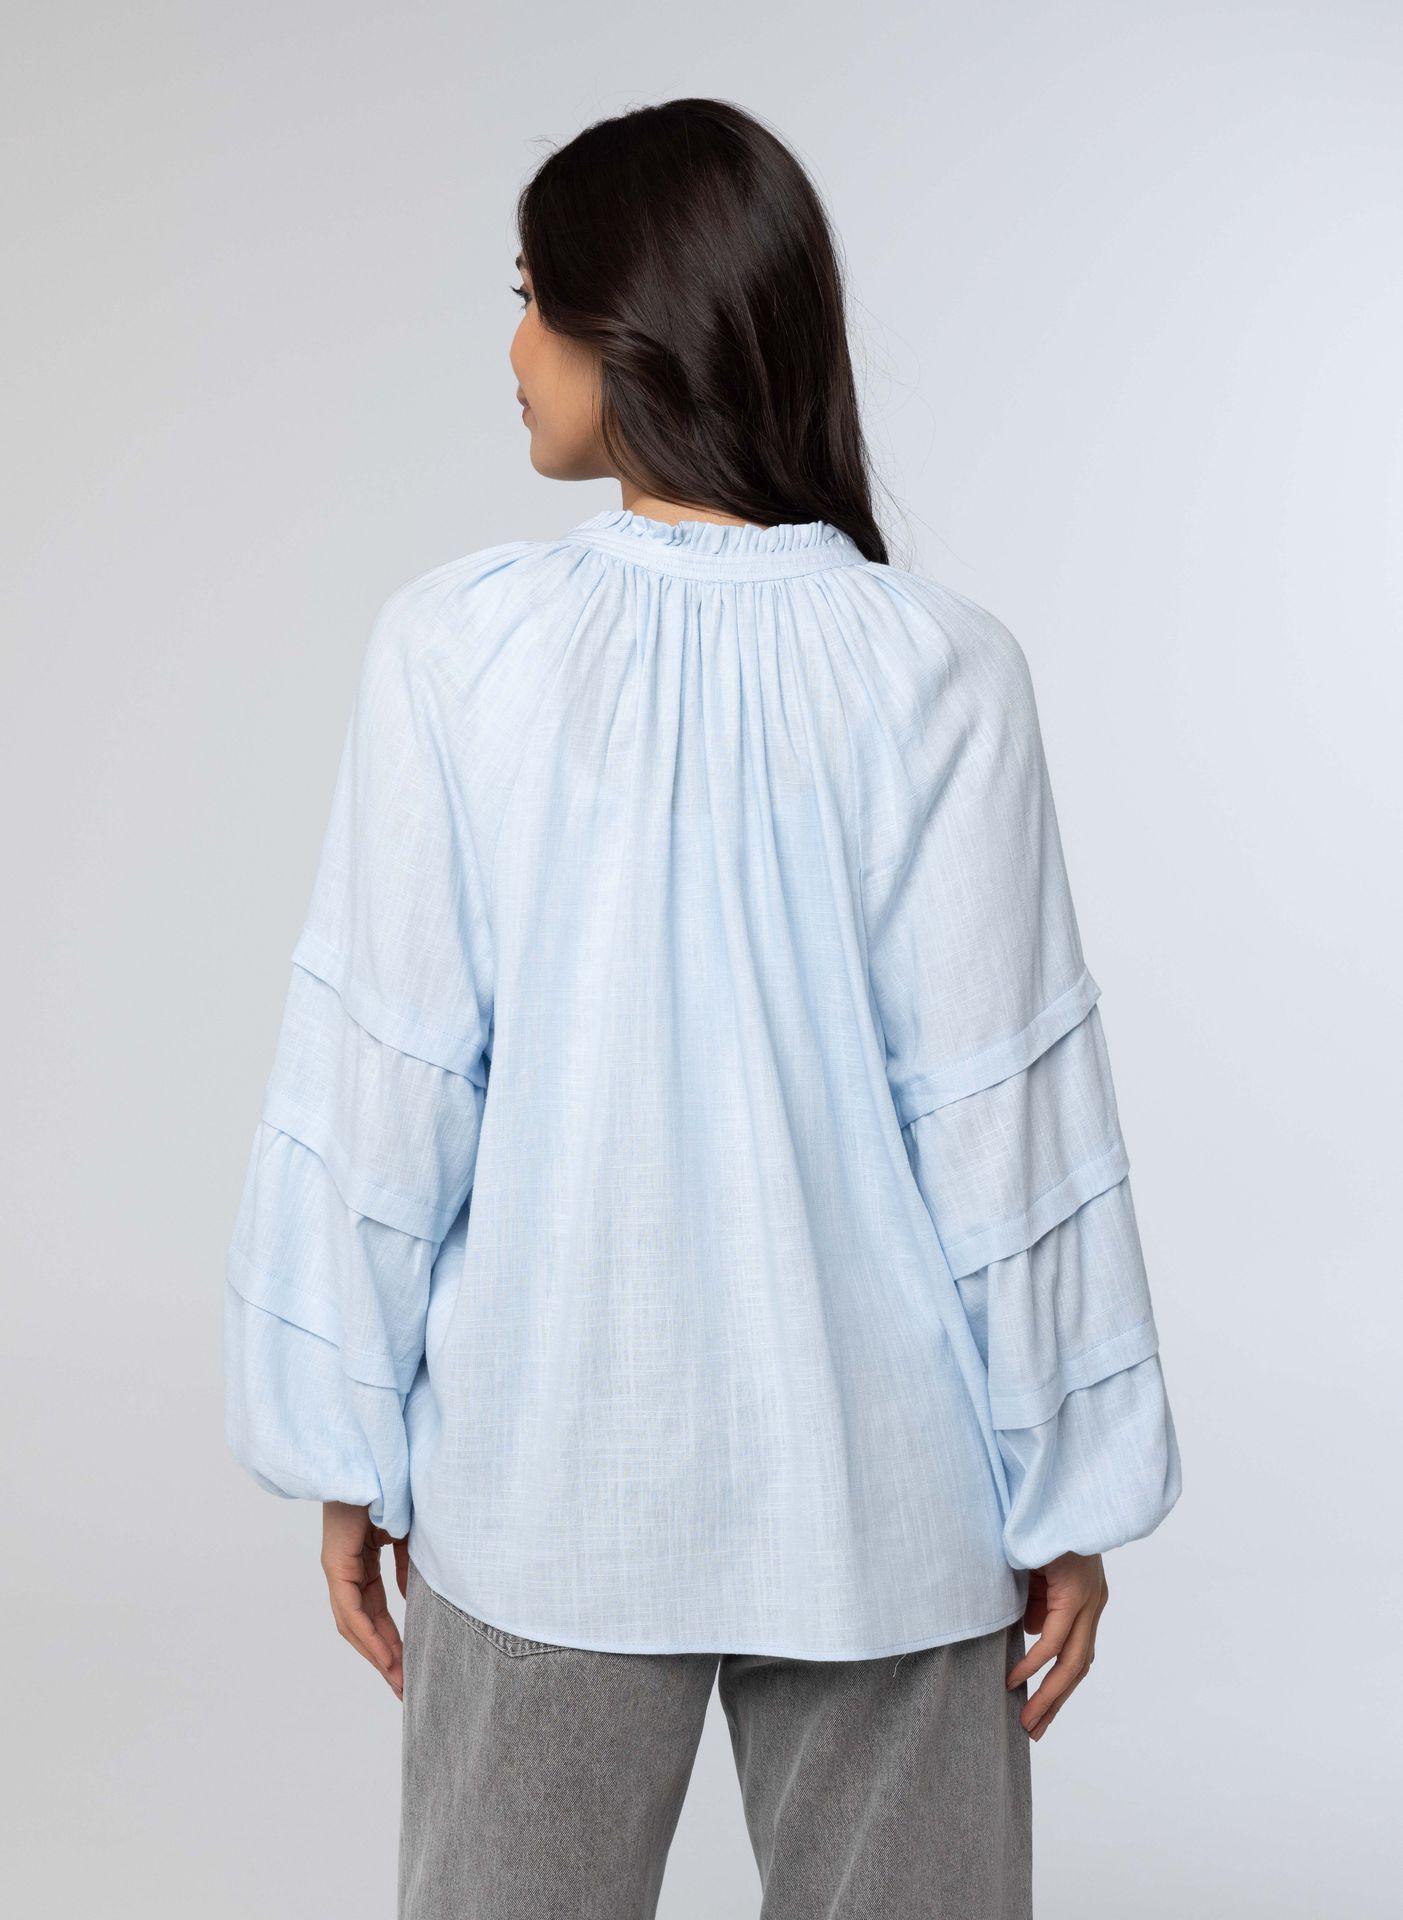 Norah Lichtblauwe blouse sky blue 213517-404